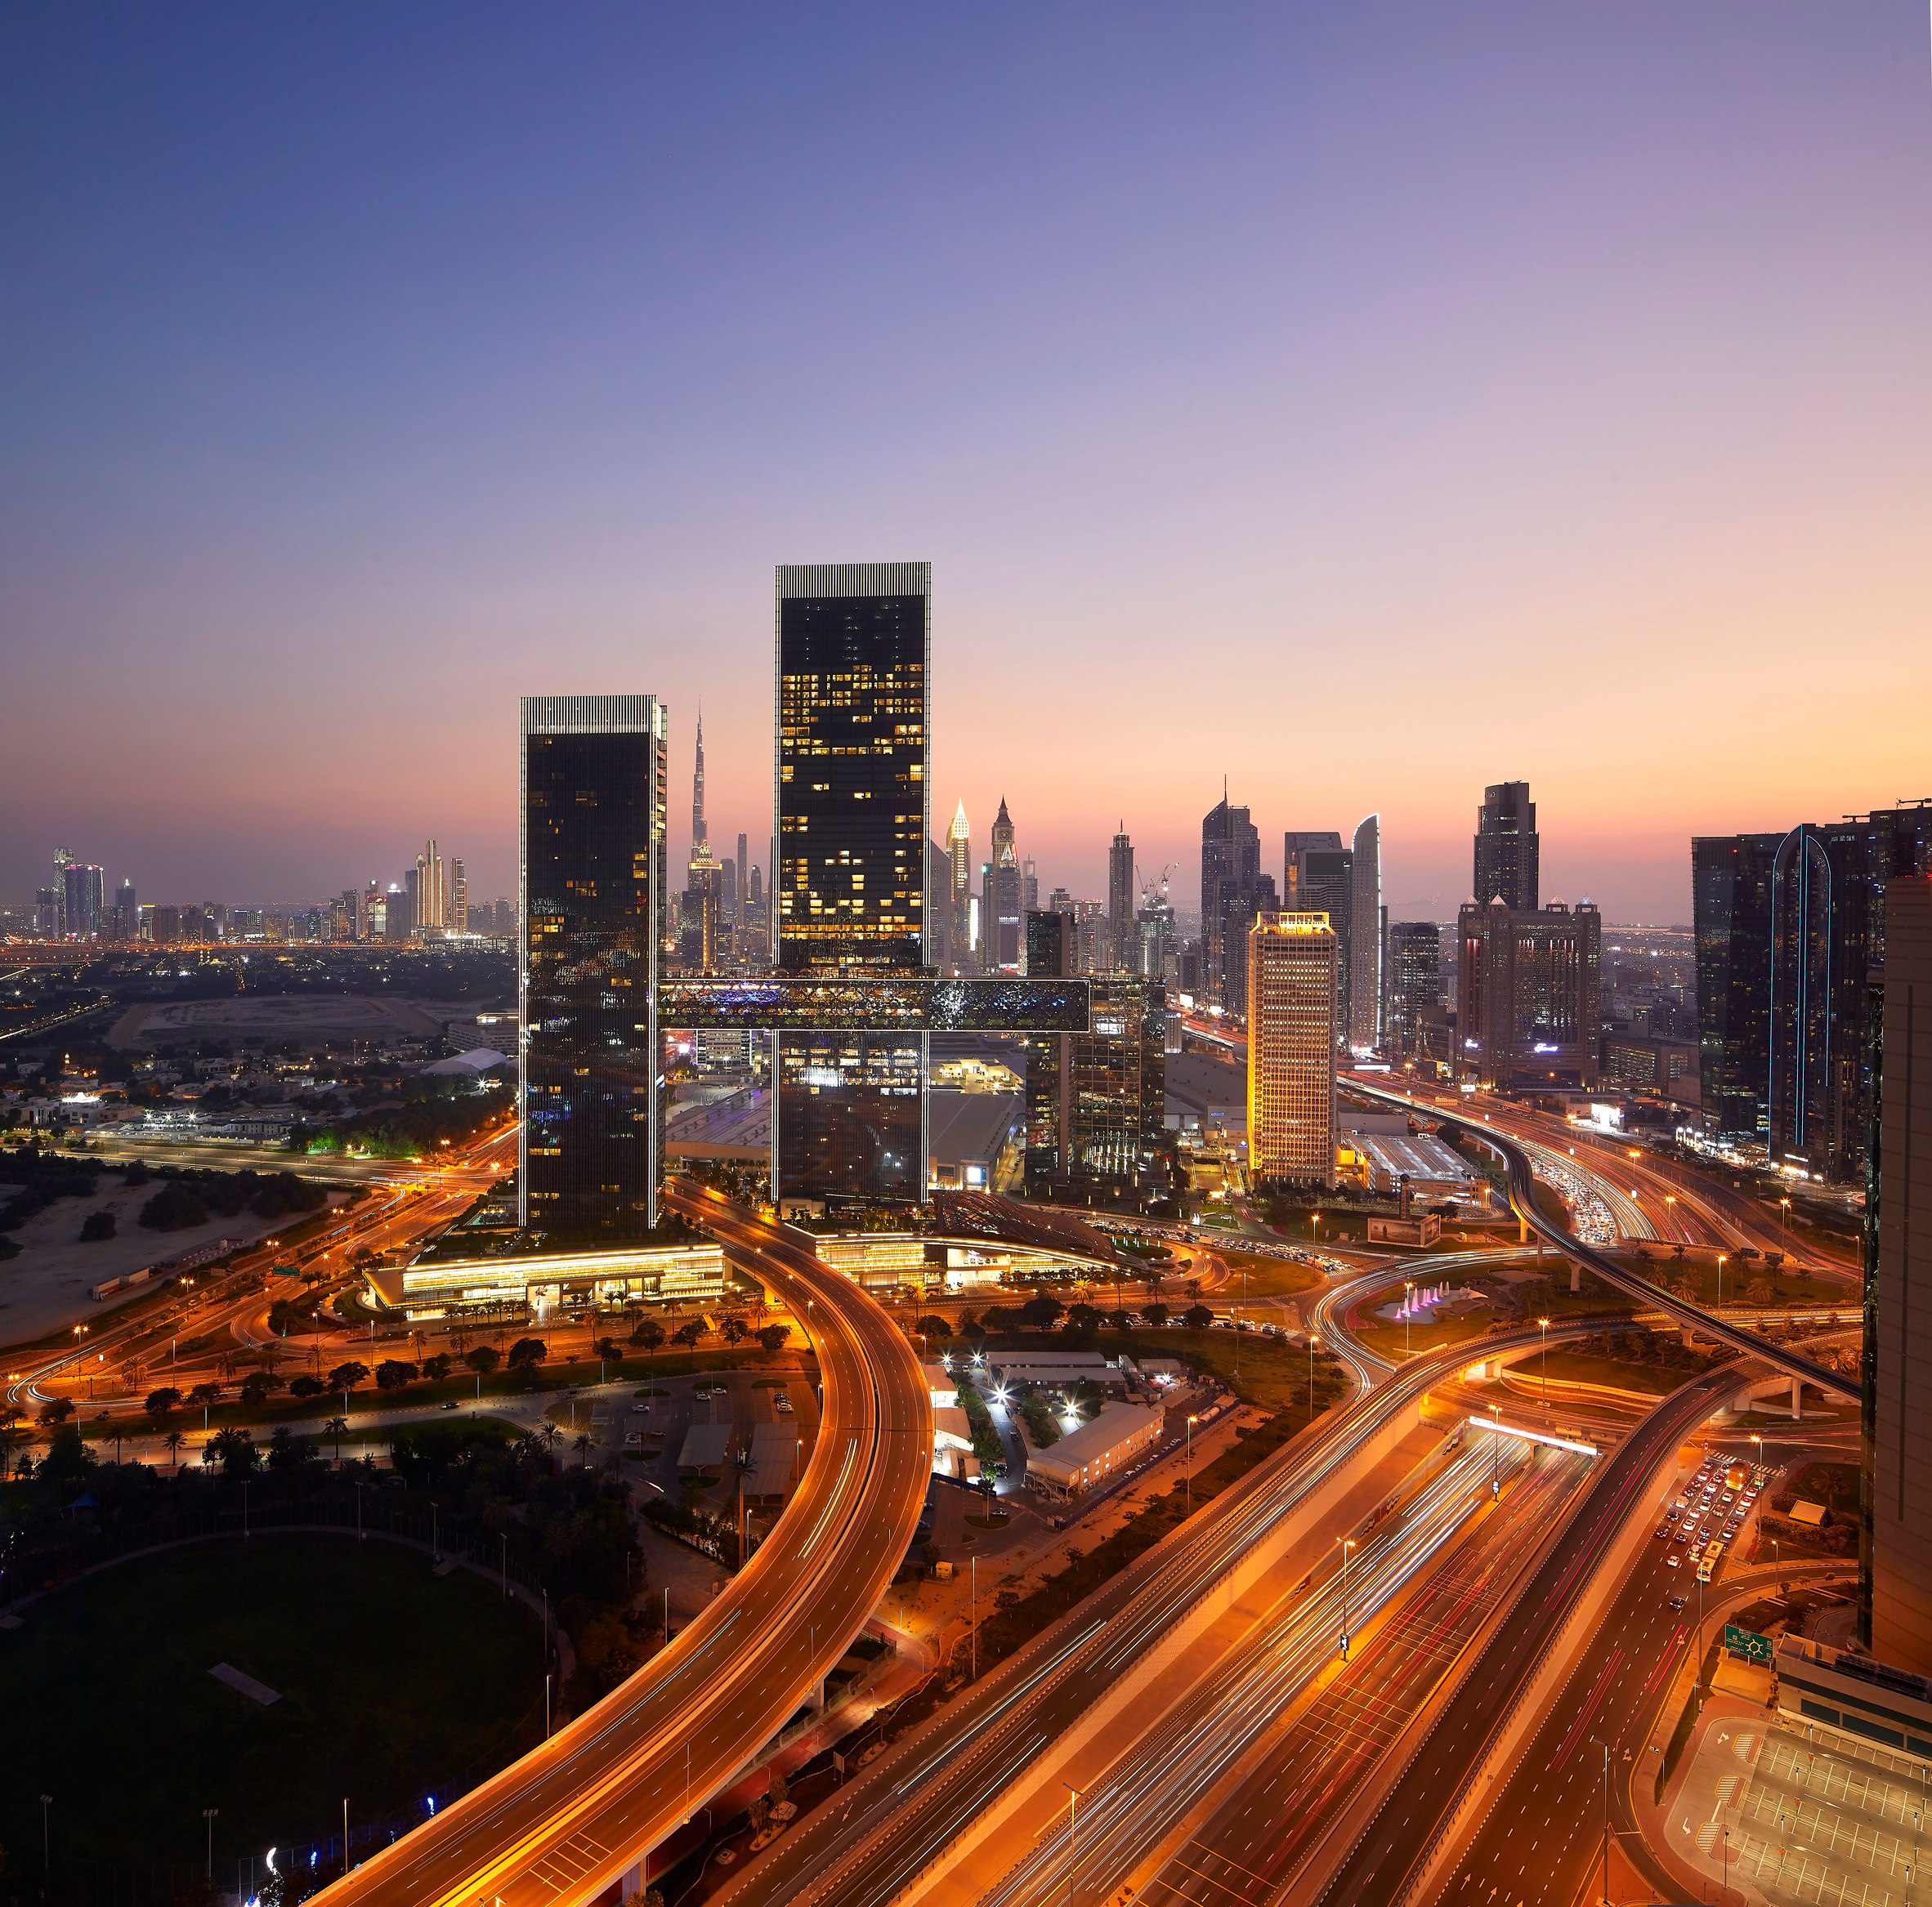 World's longest cantilever opens at One Za'abeel in Dubai